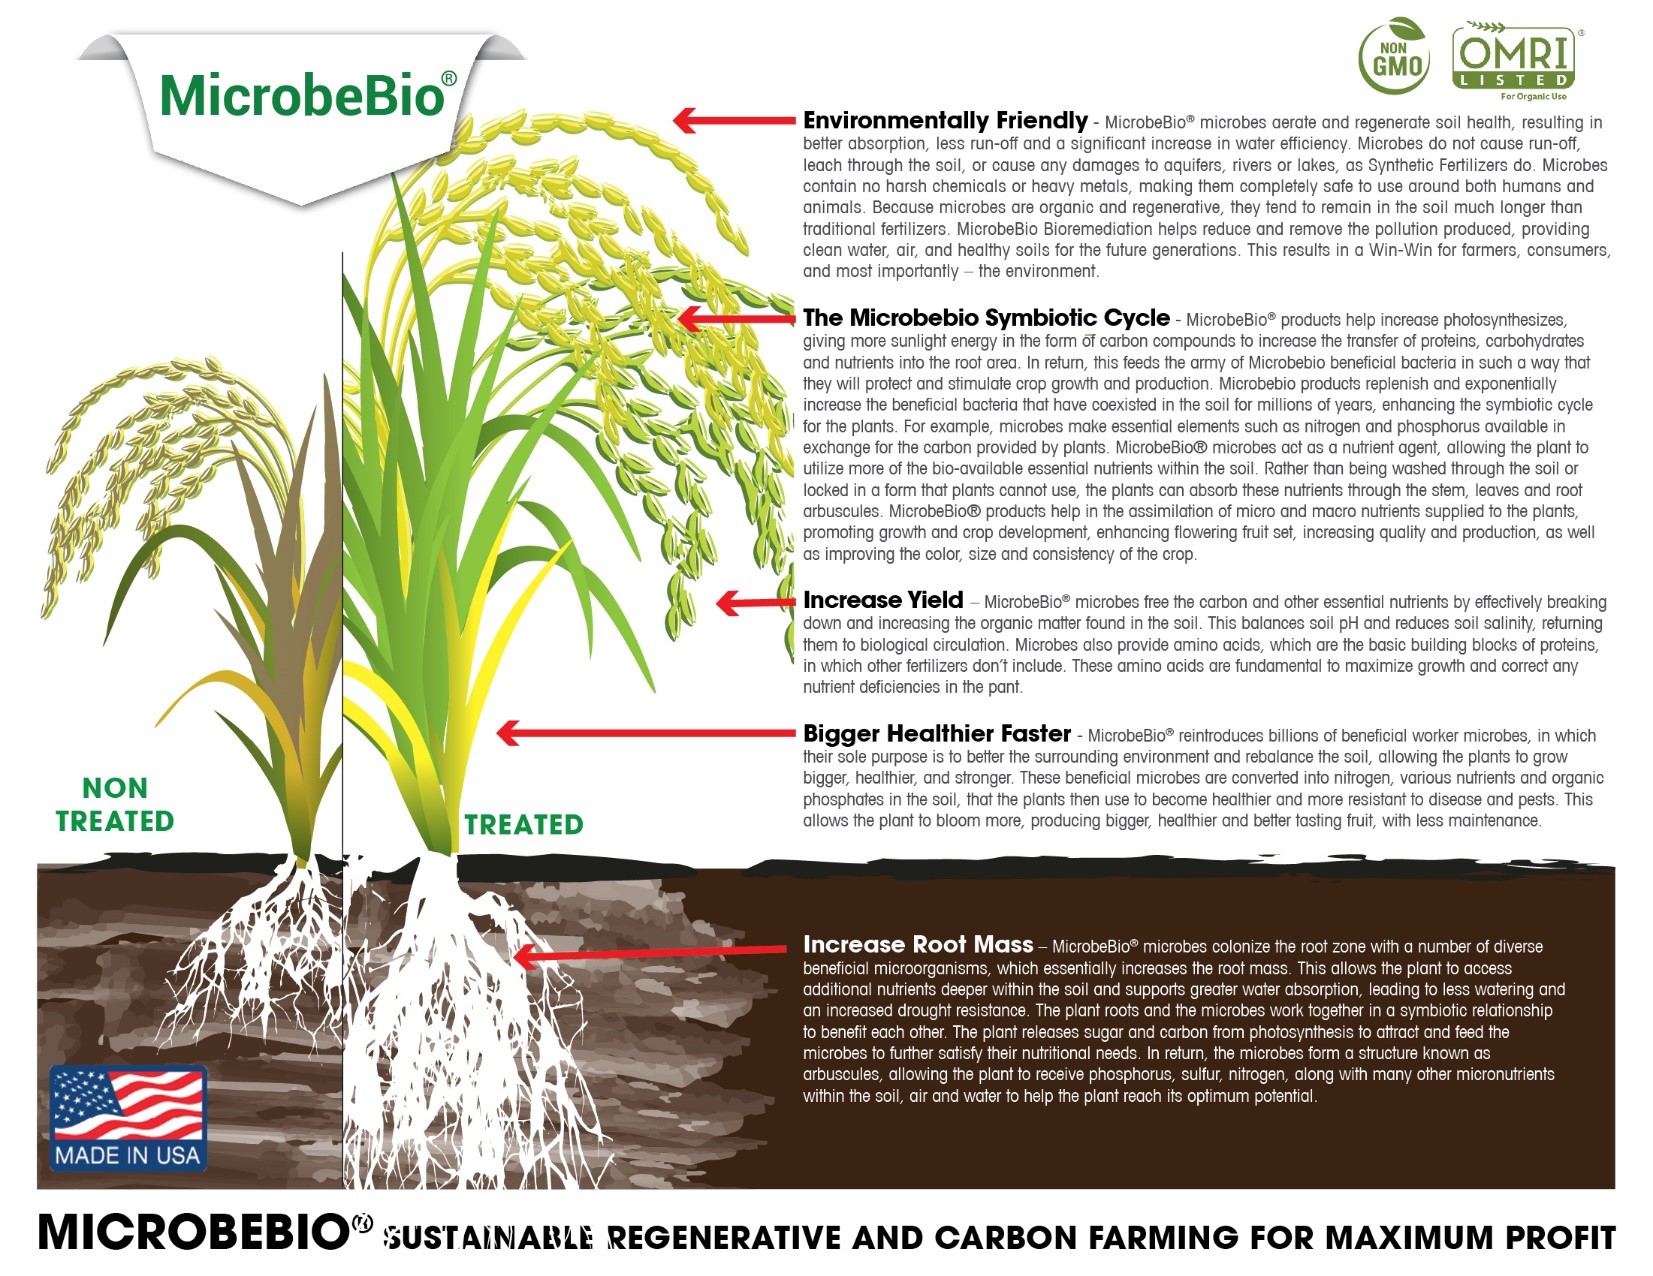 microbebio rice pest